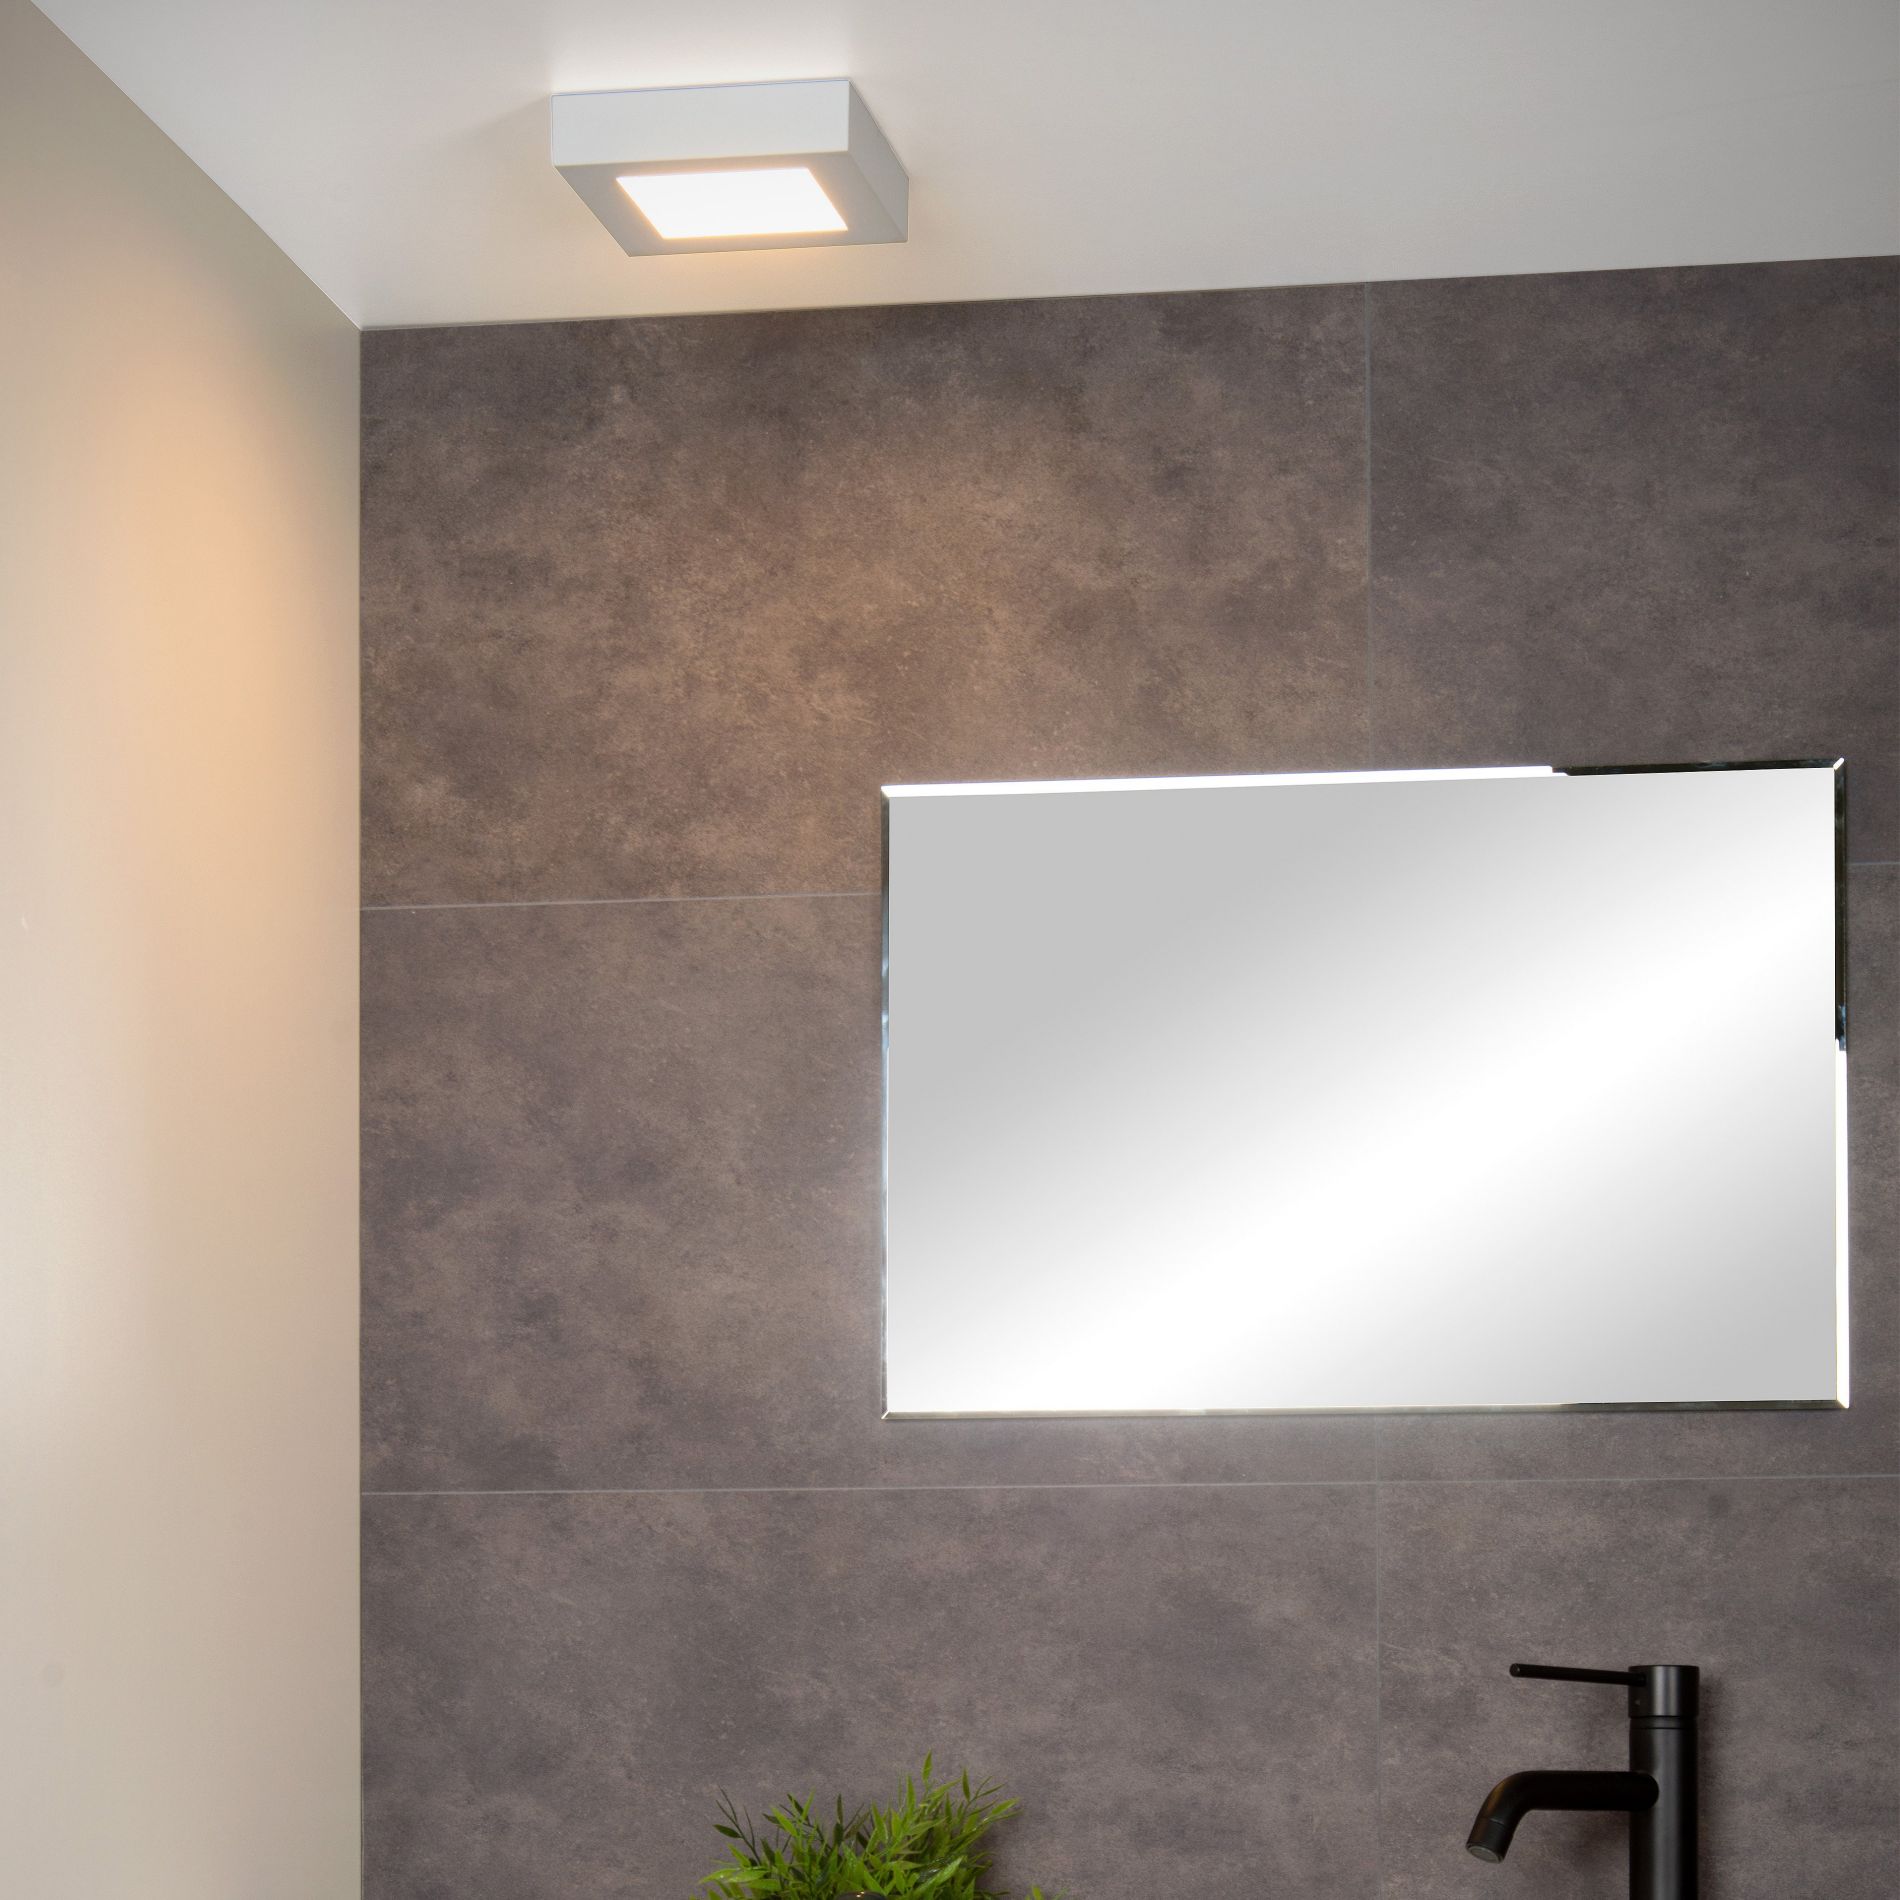 Plafonnier salle de bain LED carré BRICE (H18cm) en aluminium blanc